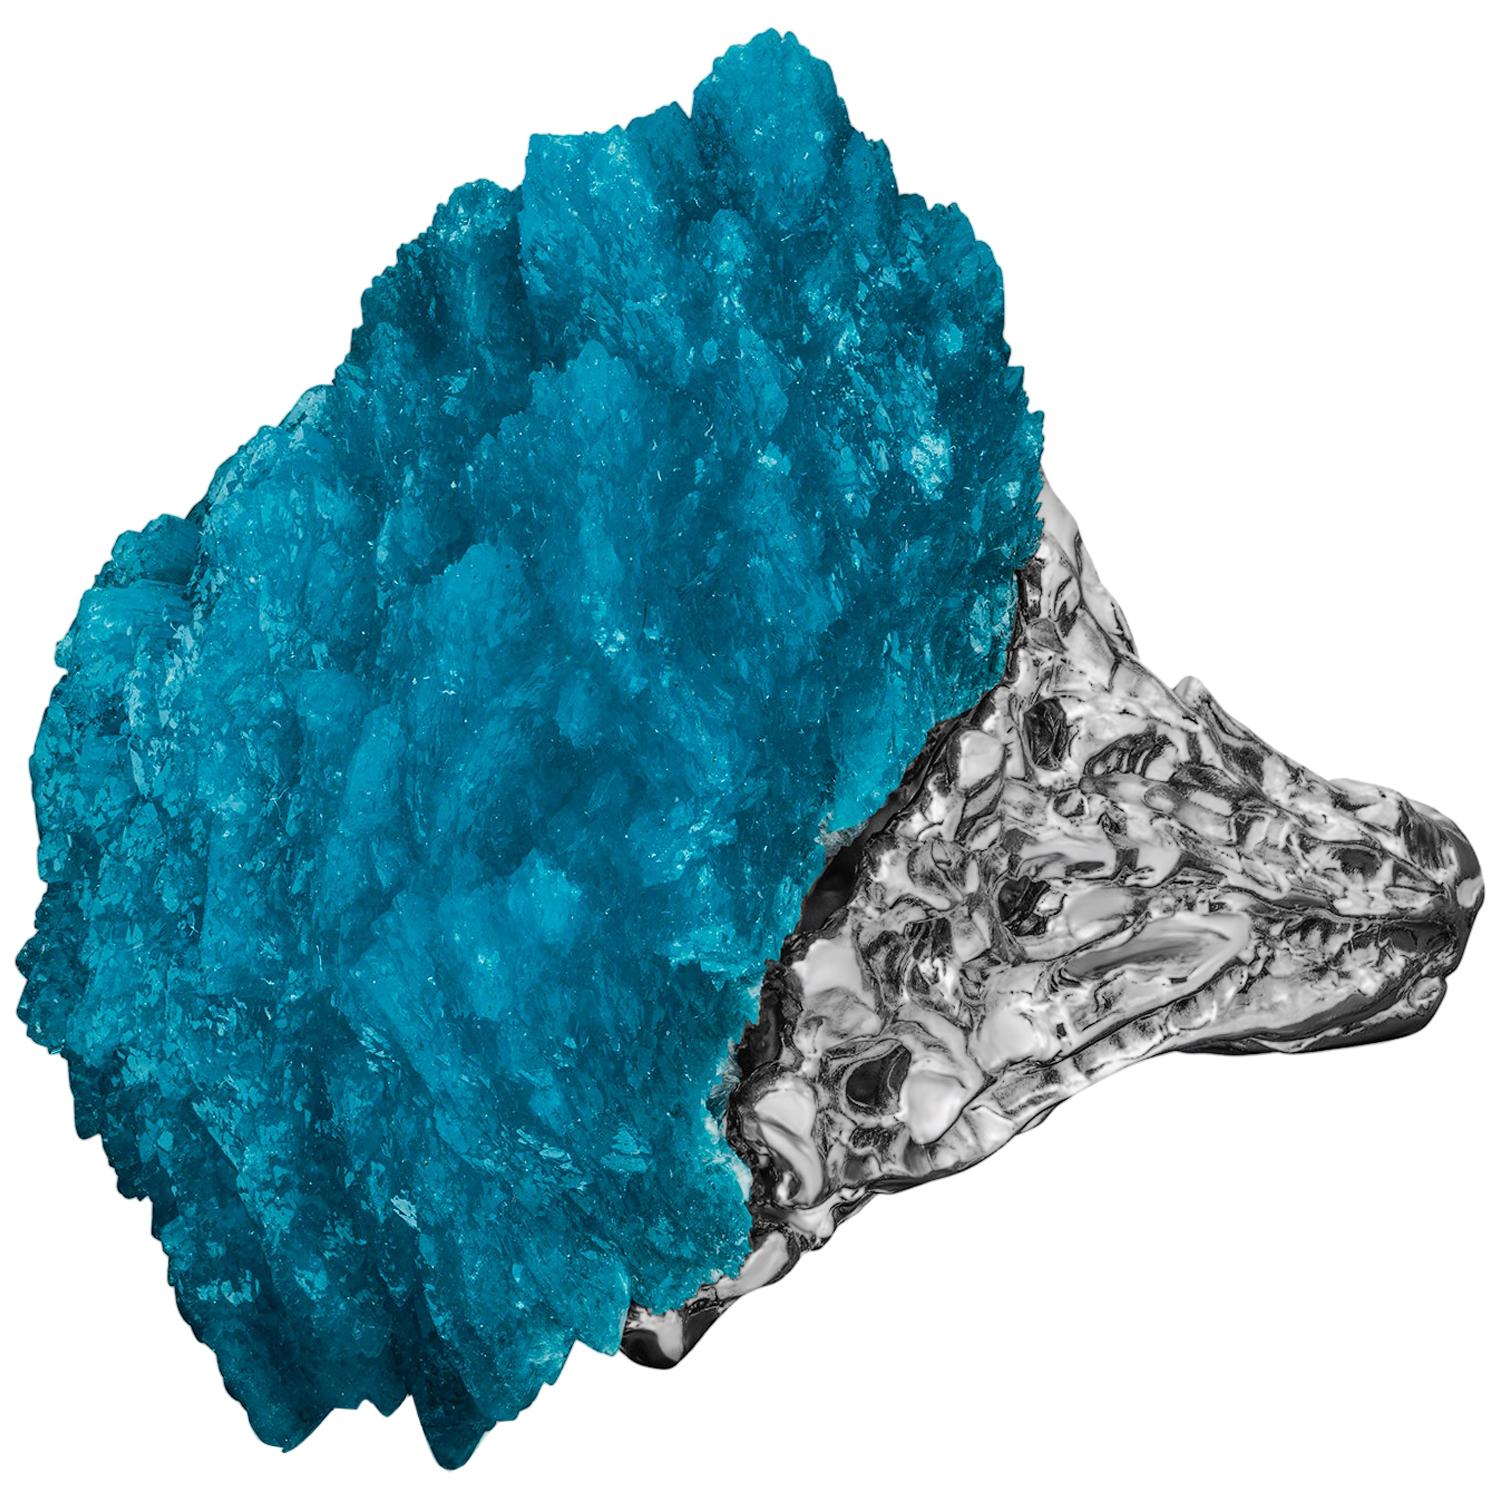 Amazing deep blue Cavansite crystal ring in 14K white gold
Cavansite origin - Pune, India
Cavansite measurements - 0.59 x 0.71 x 1.18 in / 15 x 18 x 30 mm
cavansite weight - 32.5 carats
ring size - 7.25 US
ring weight - 14.7 grams


We ship our